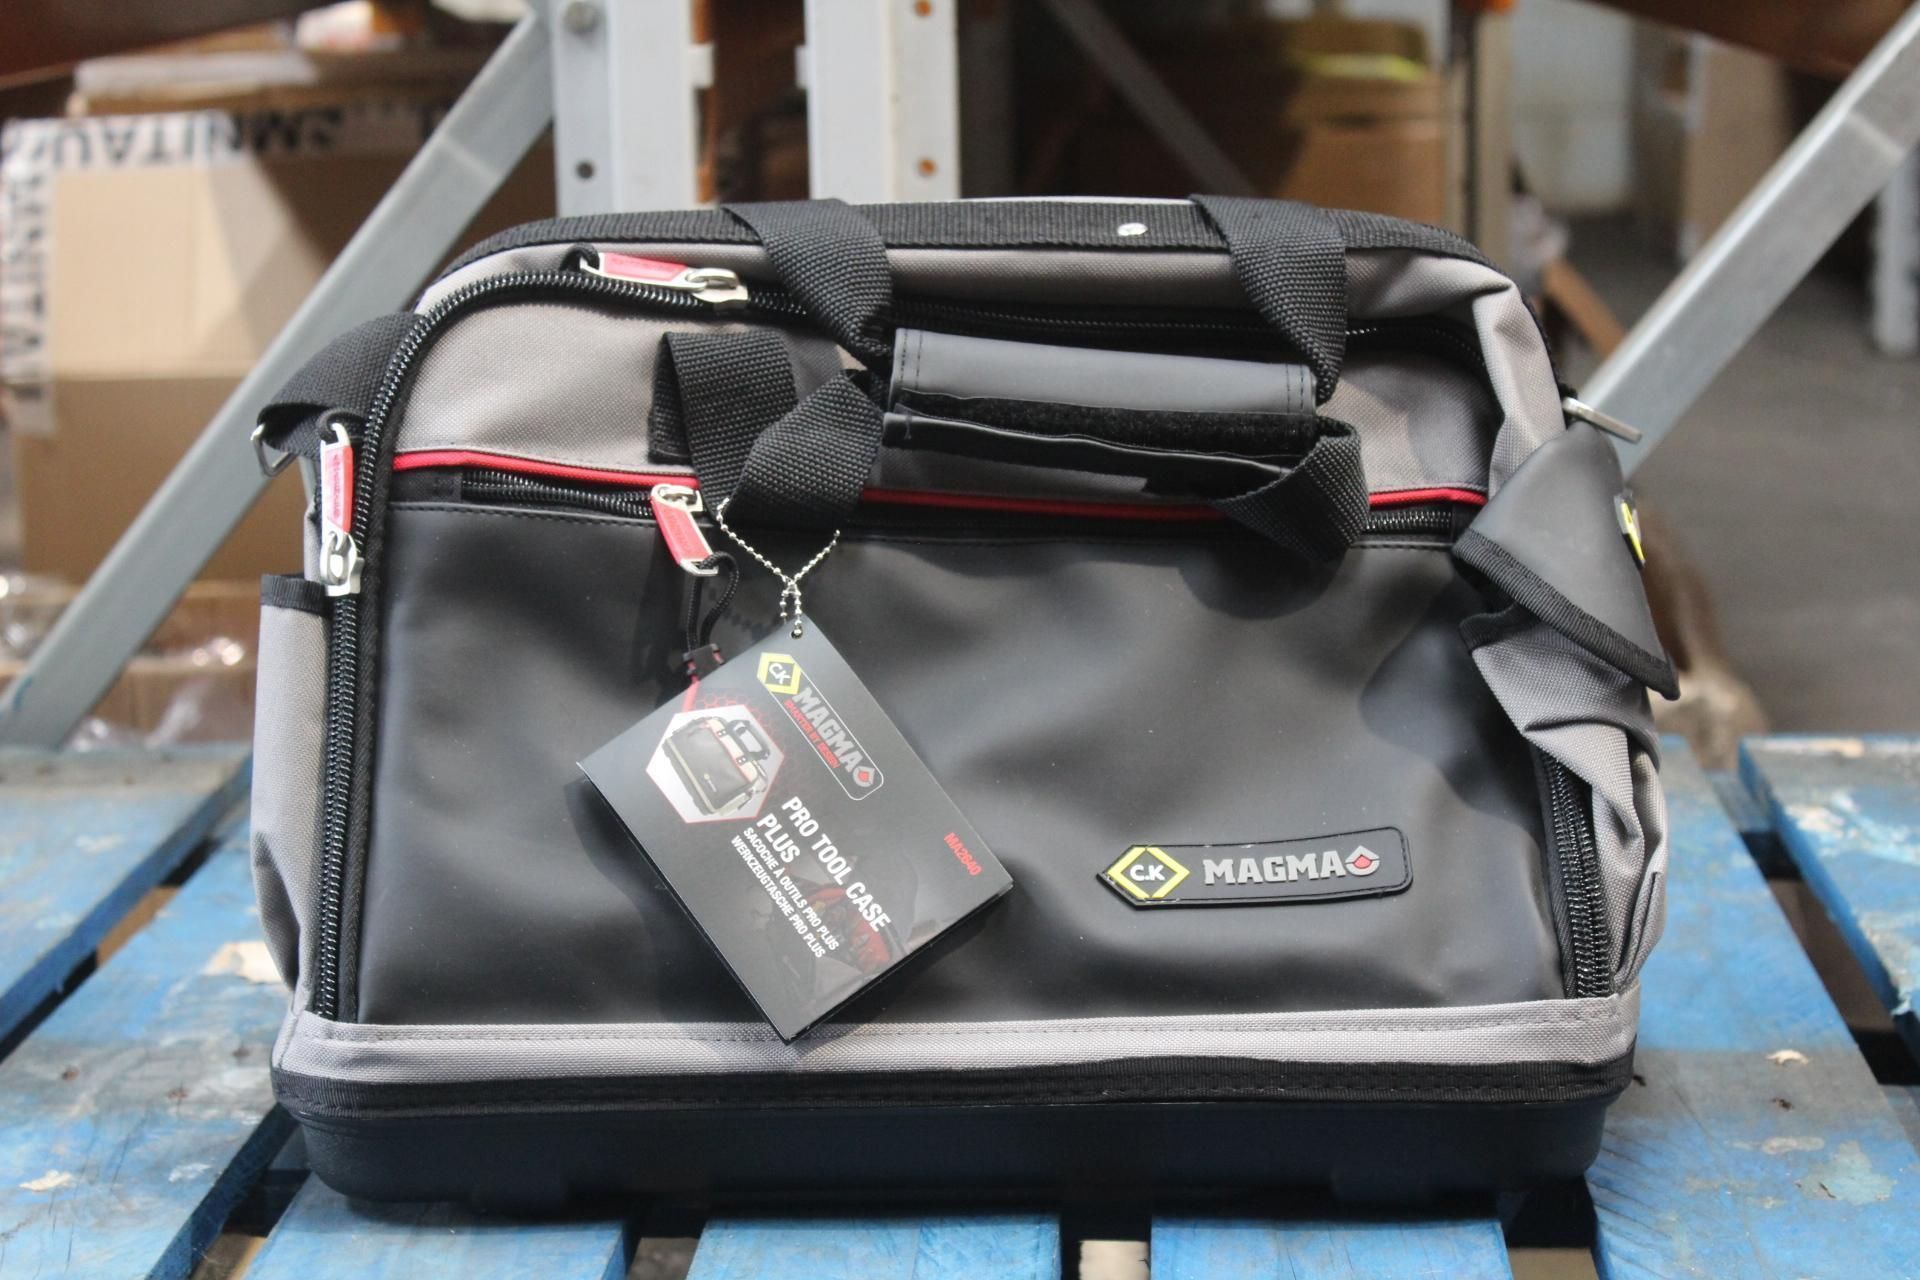 CK Magma Pro Tool Case Plus (MA2640), Black/Red, Medium Size. Unused.